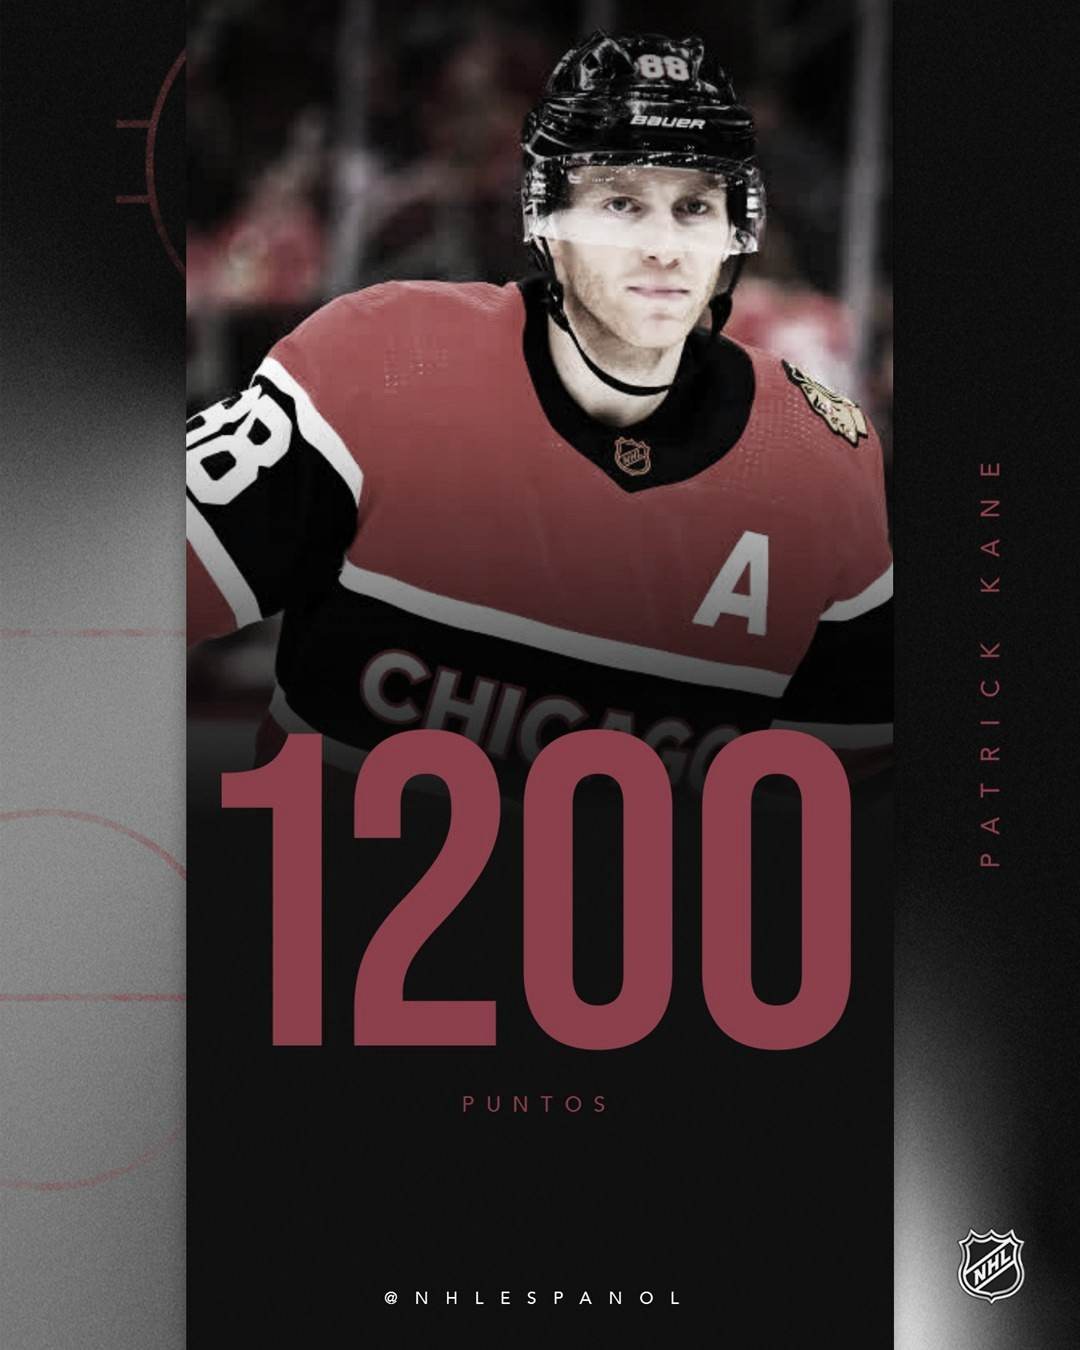 Patrick Kane llegó a los 1200 puntos